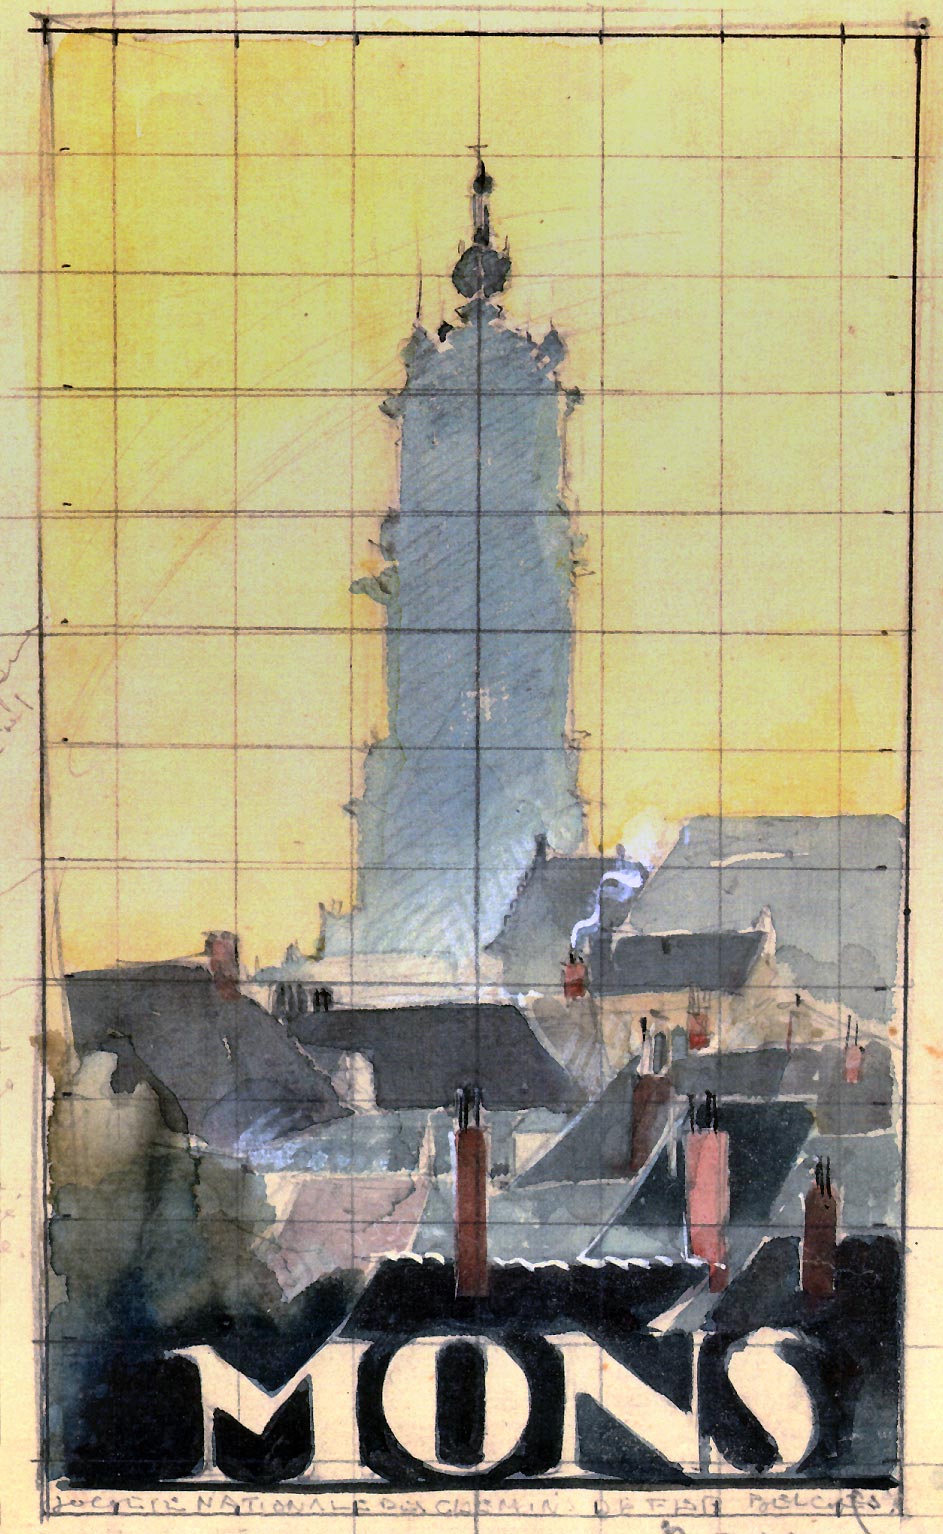 Mappemonde, 1849 Poster Print by J. Andriveau-Goujon - Item # VARPDX294915  - Posterazzi